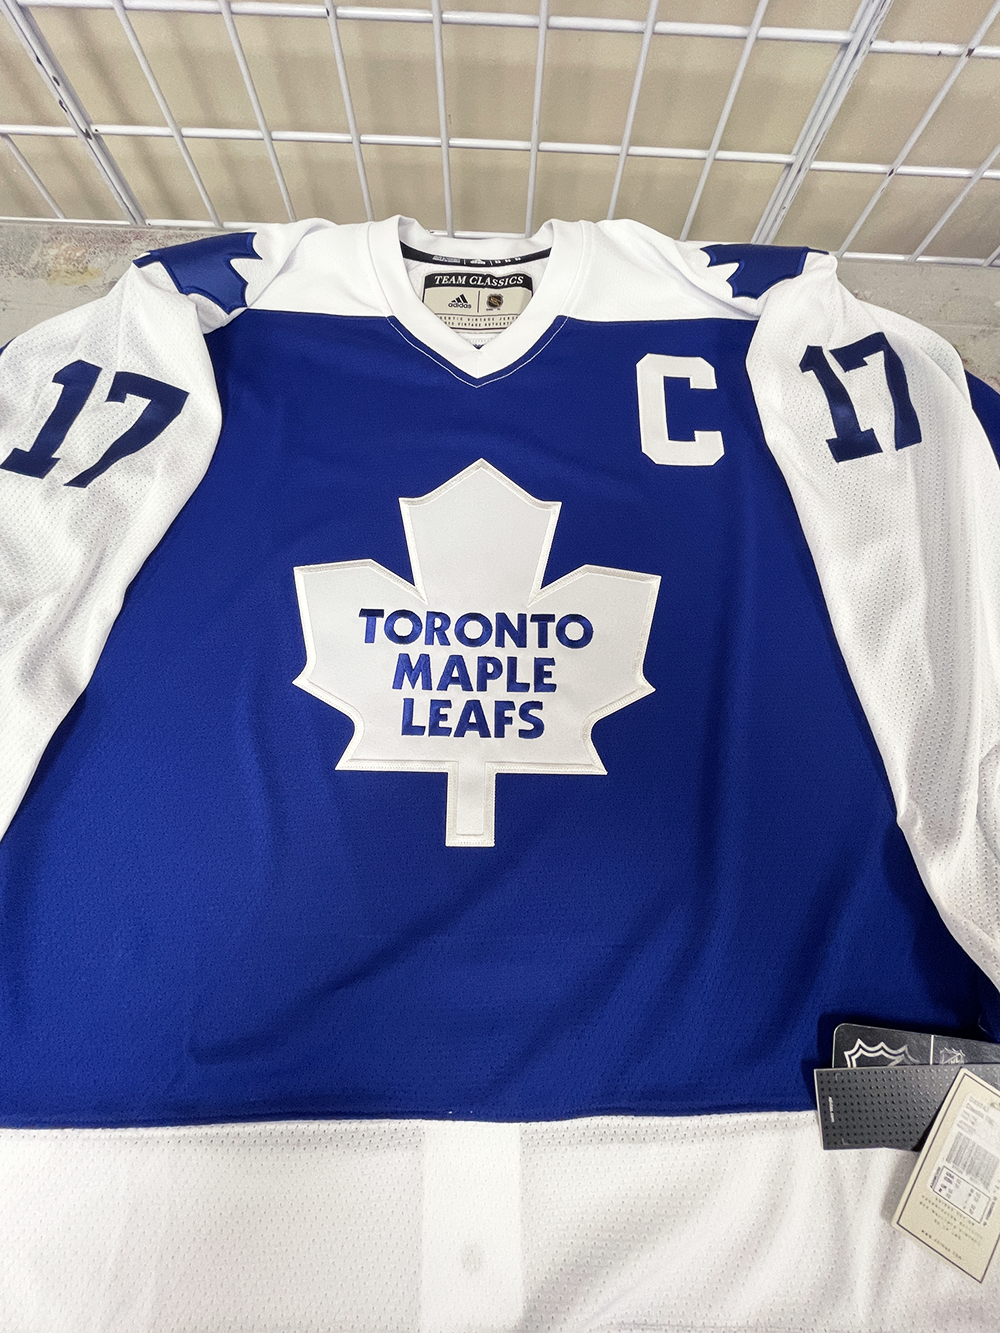 Wendel Clark Toronto Maple Leafs Autographed Retro CCM Hockey Jersey